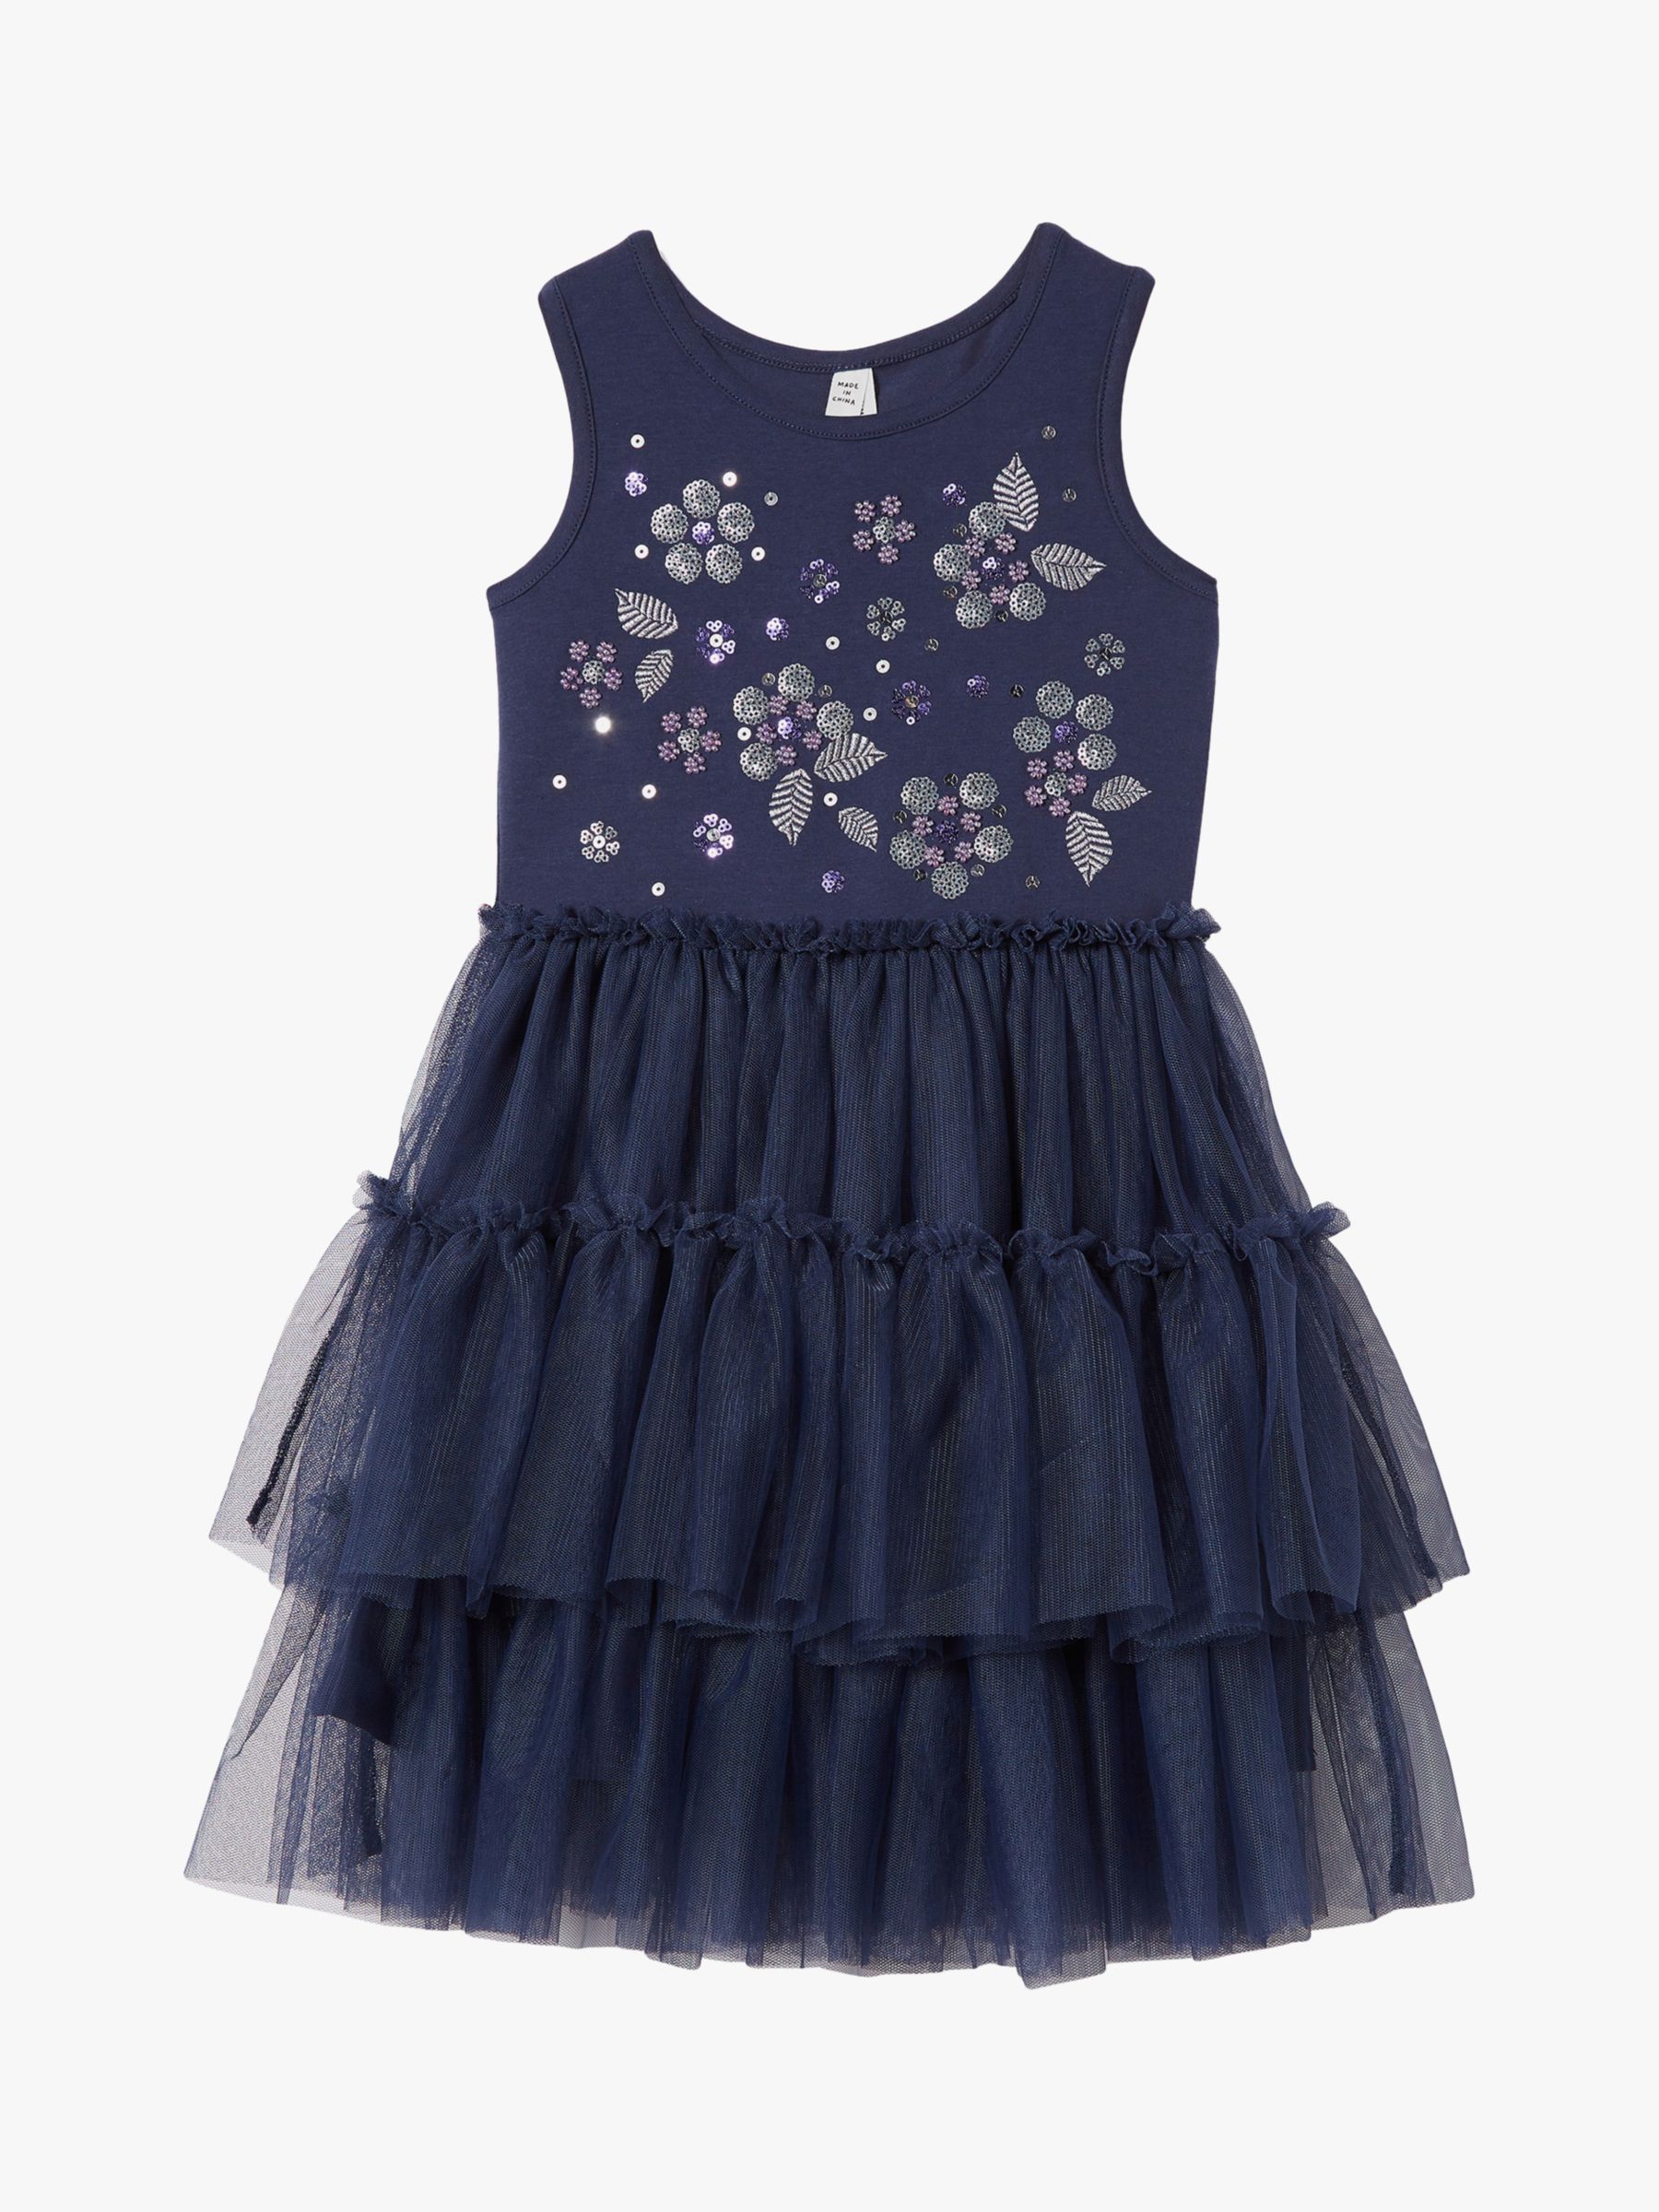 Cotton On Kids' Iris Dress Up Sequin Floral Dress, Navy